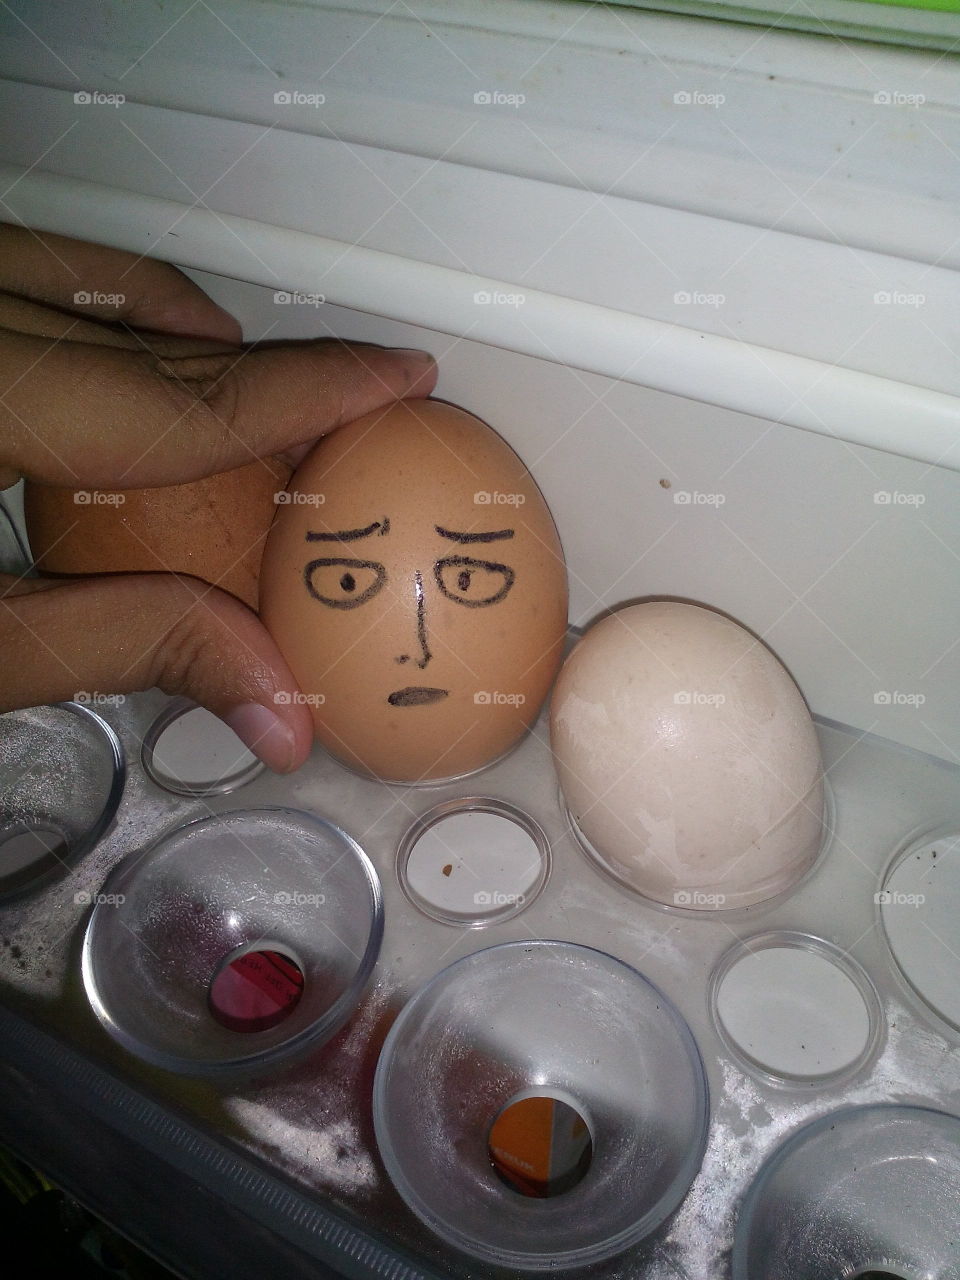 Egg or saitama's head?